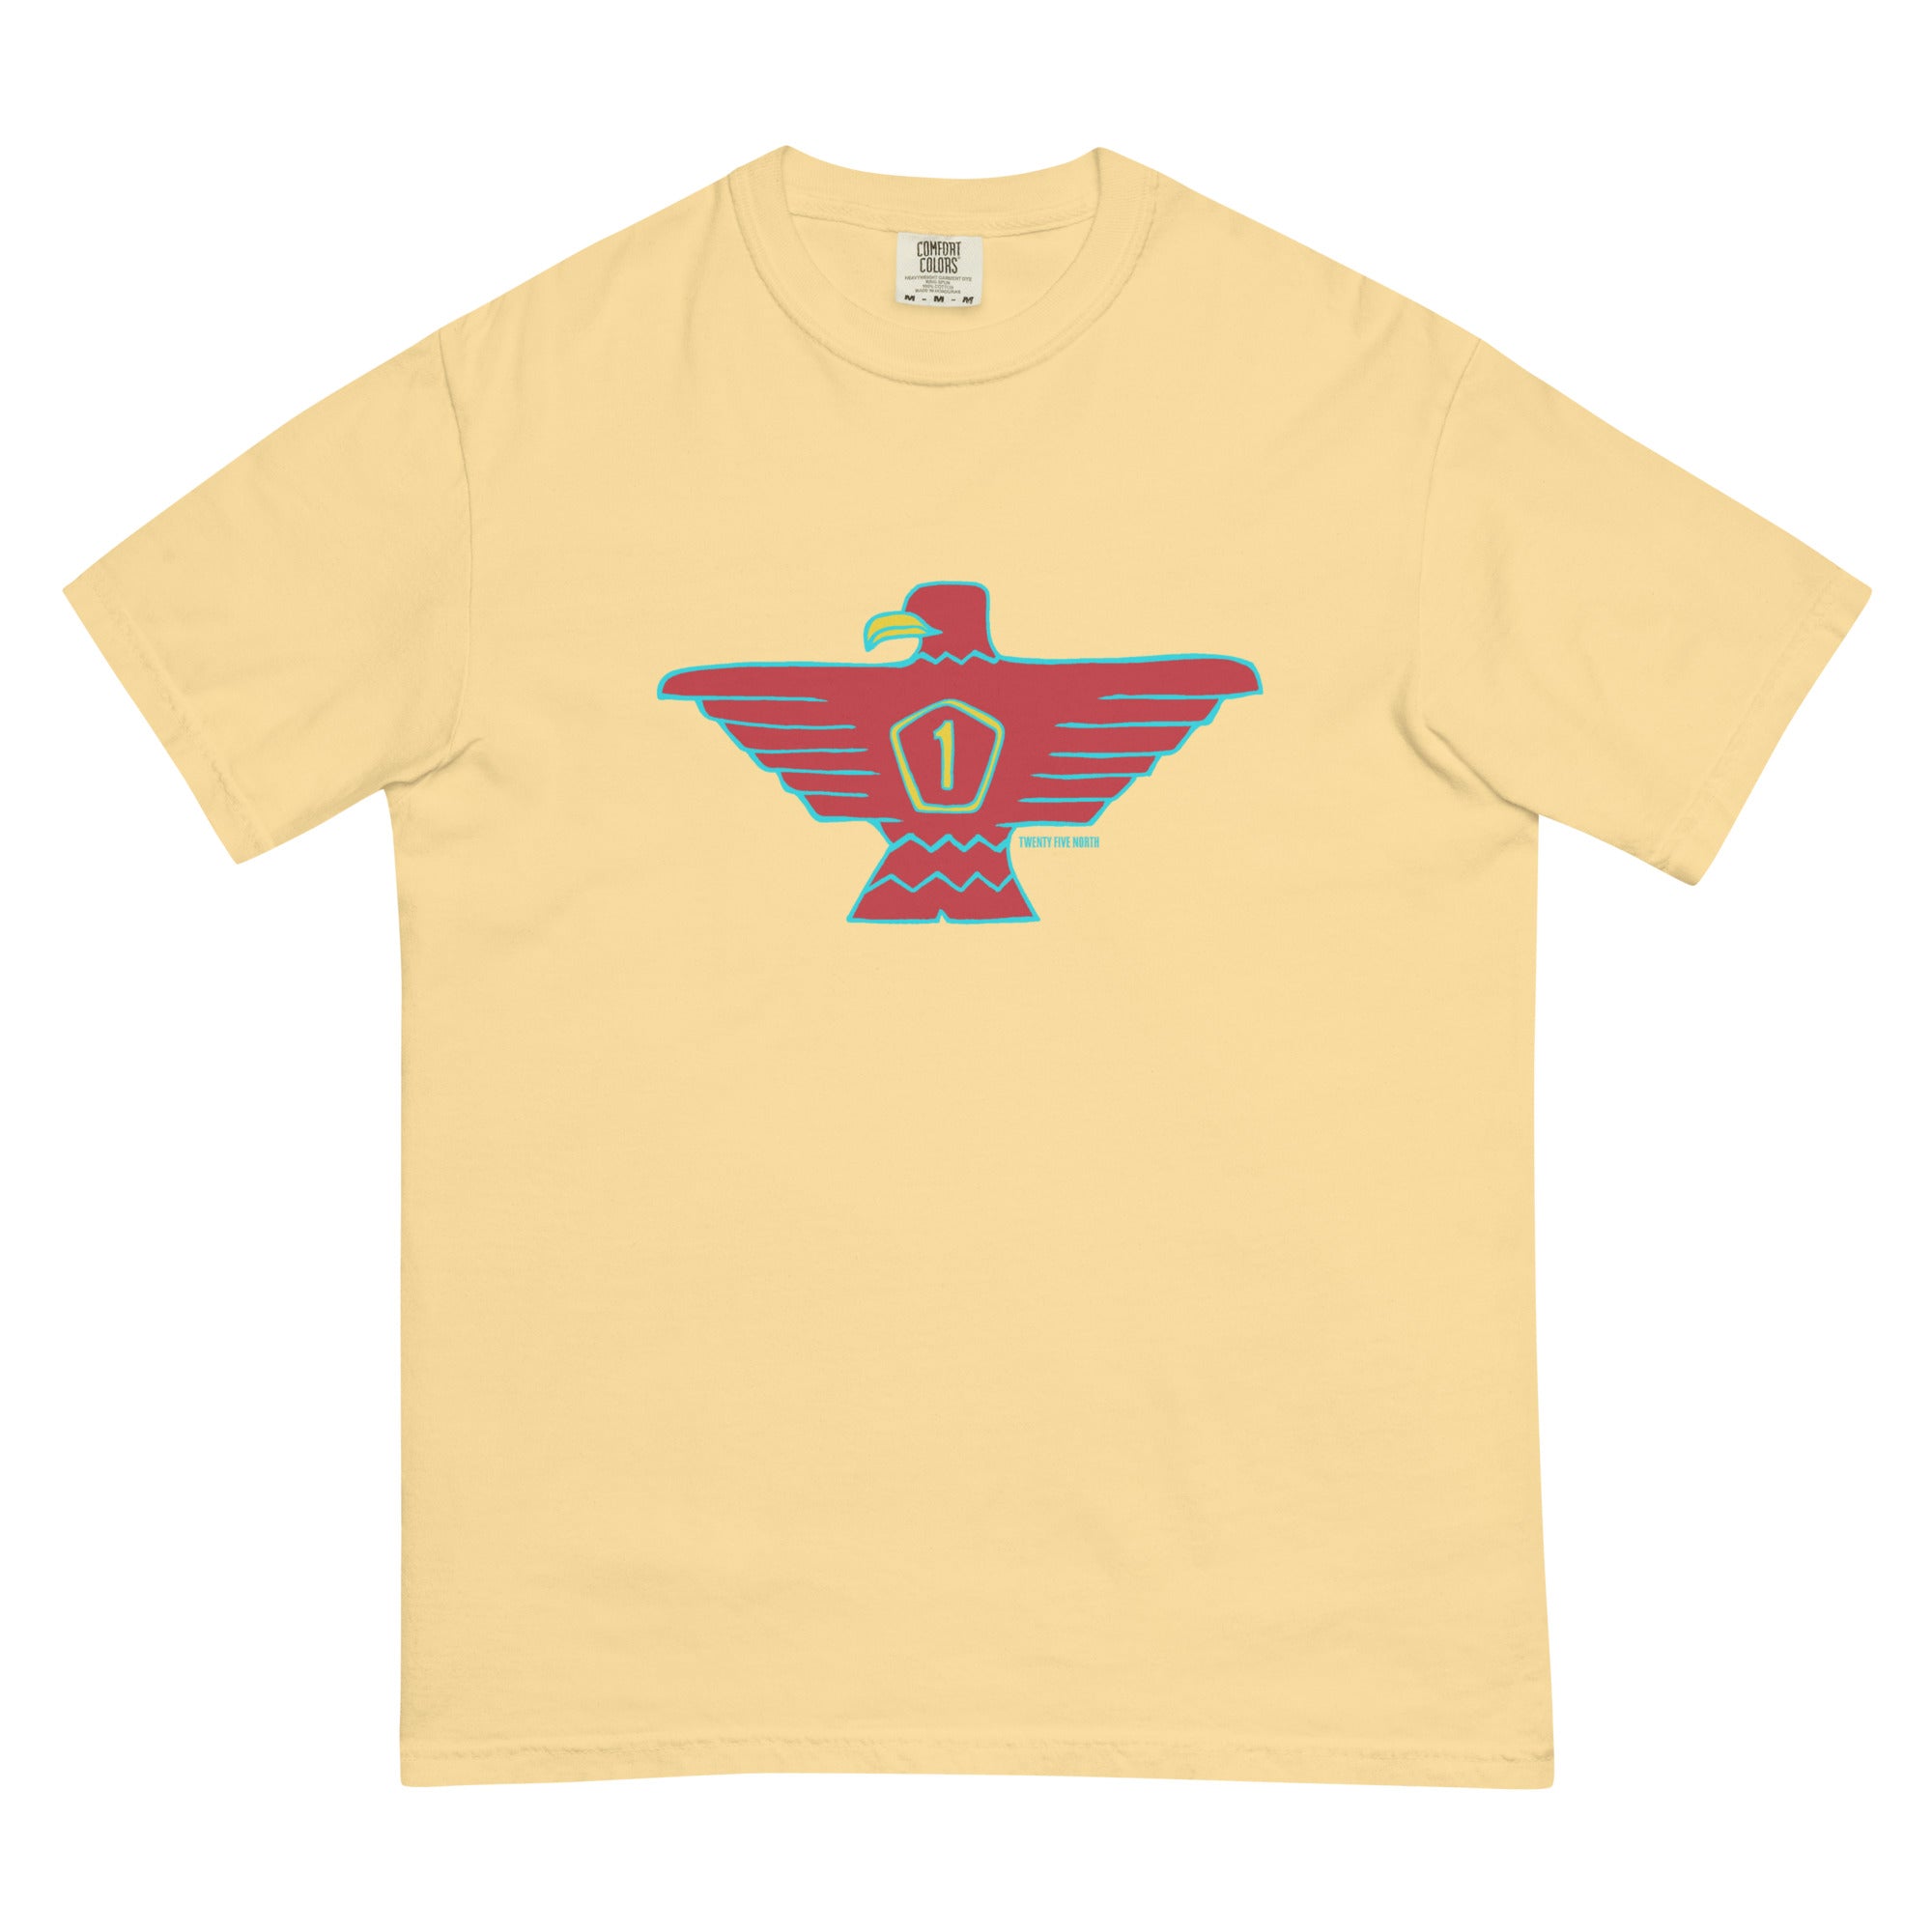 Teller 1 Thunderbird T-Shirt